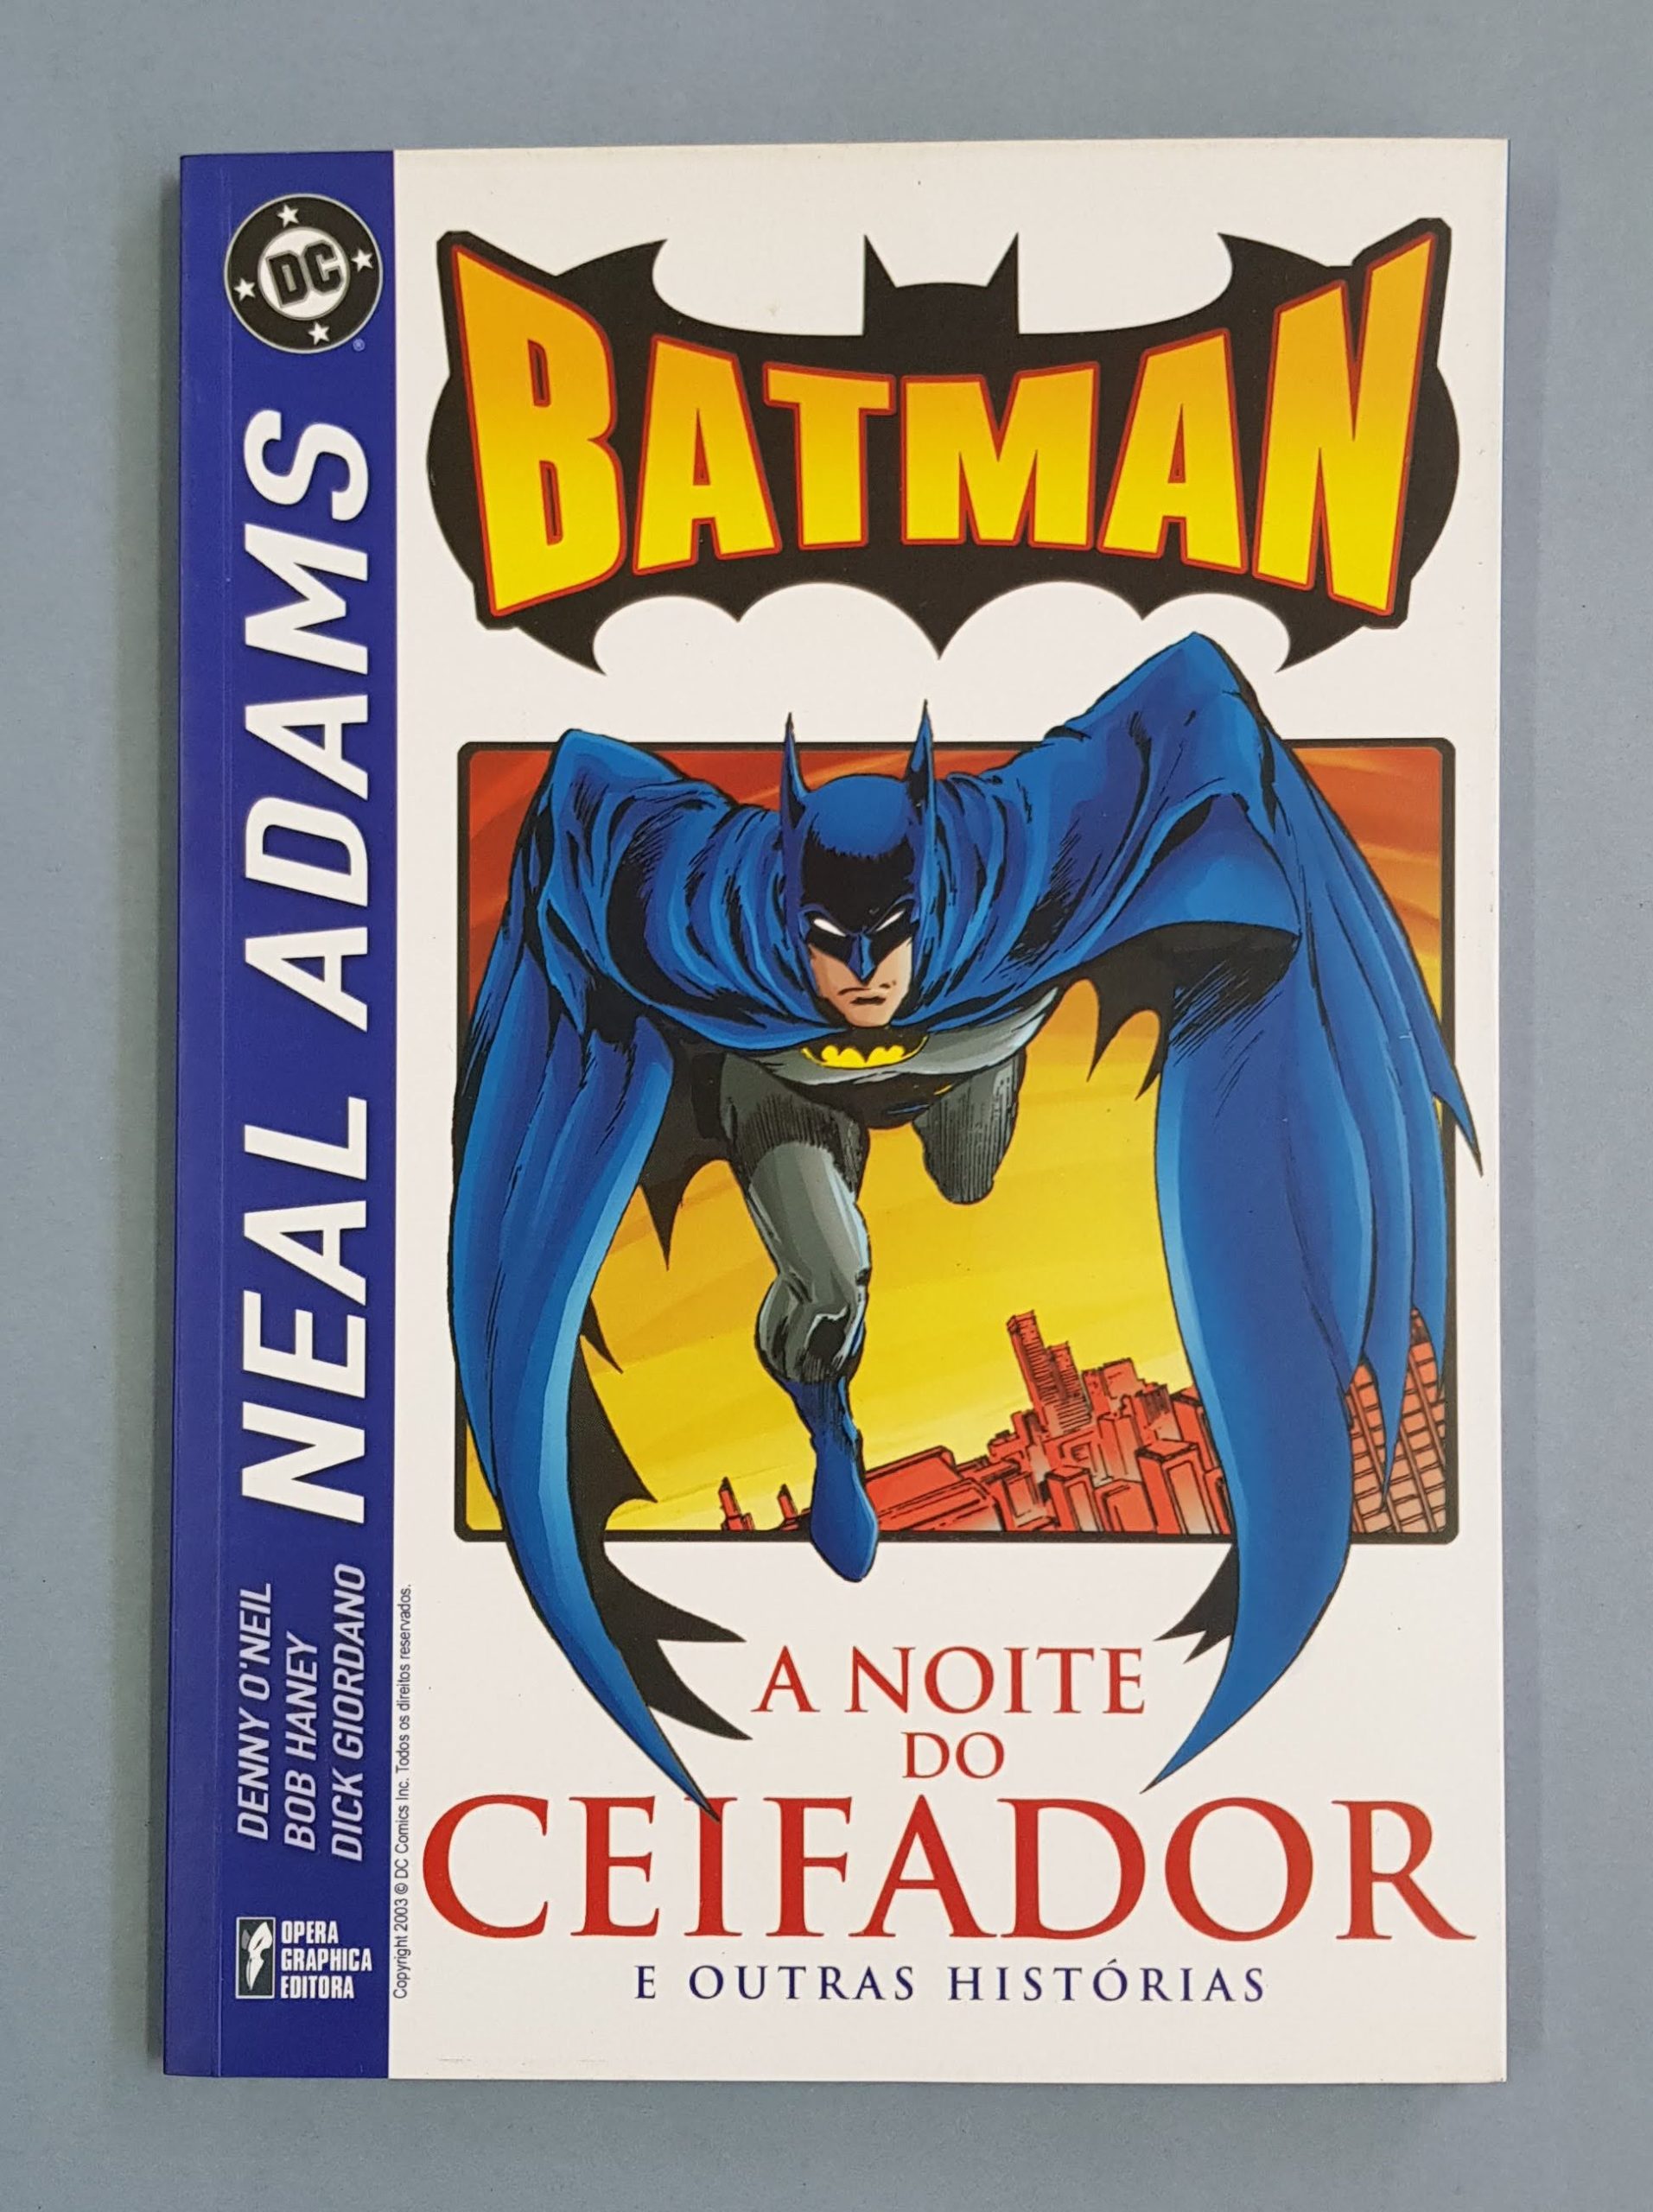 BATMAN: A NOITE DO CEIFADOR